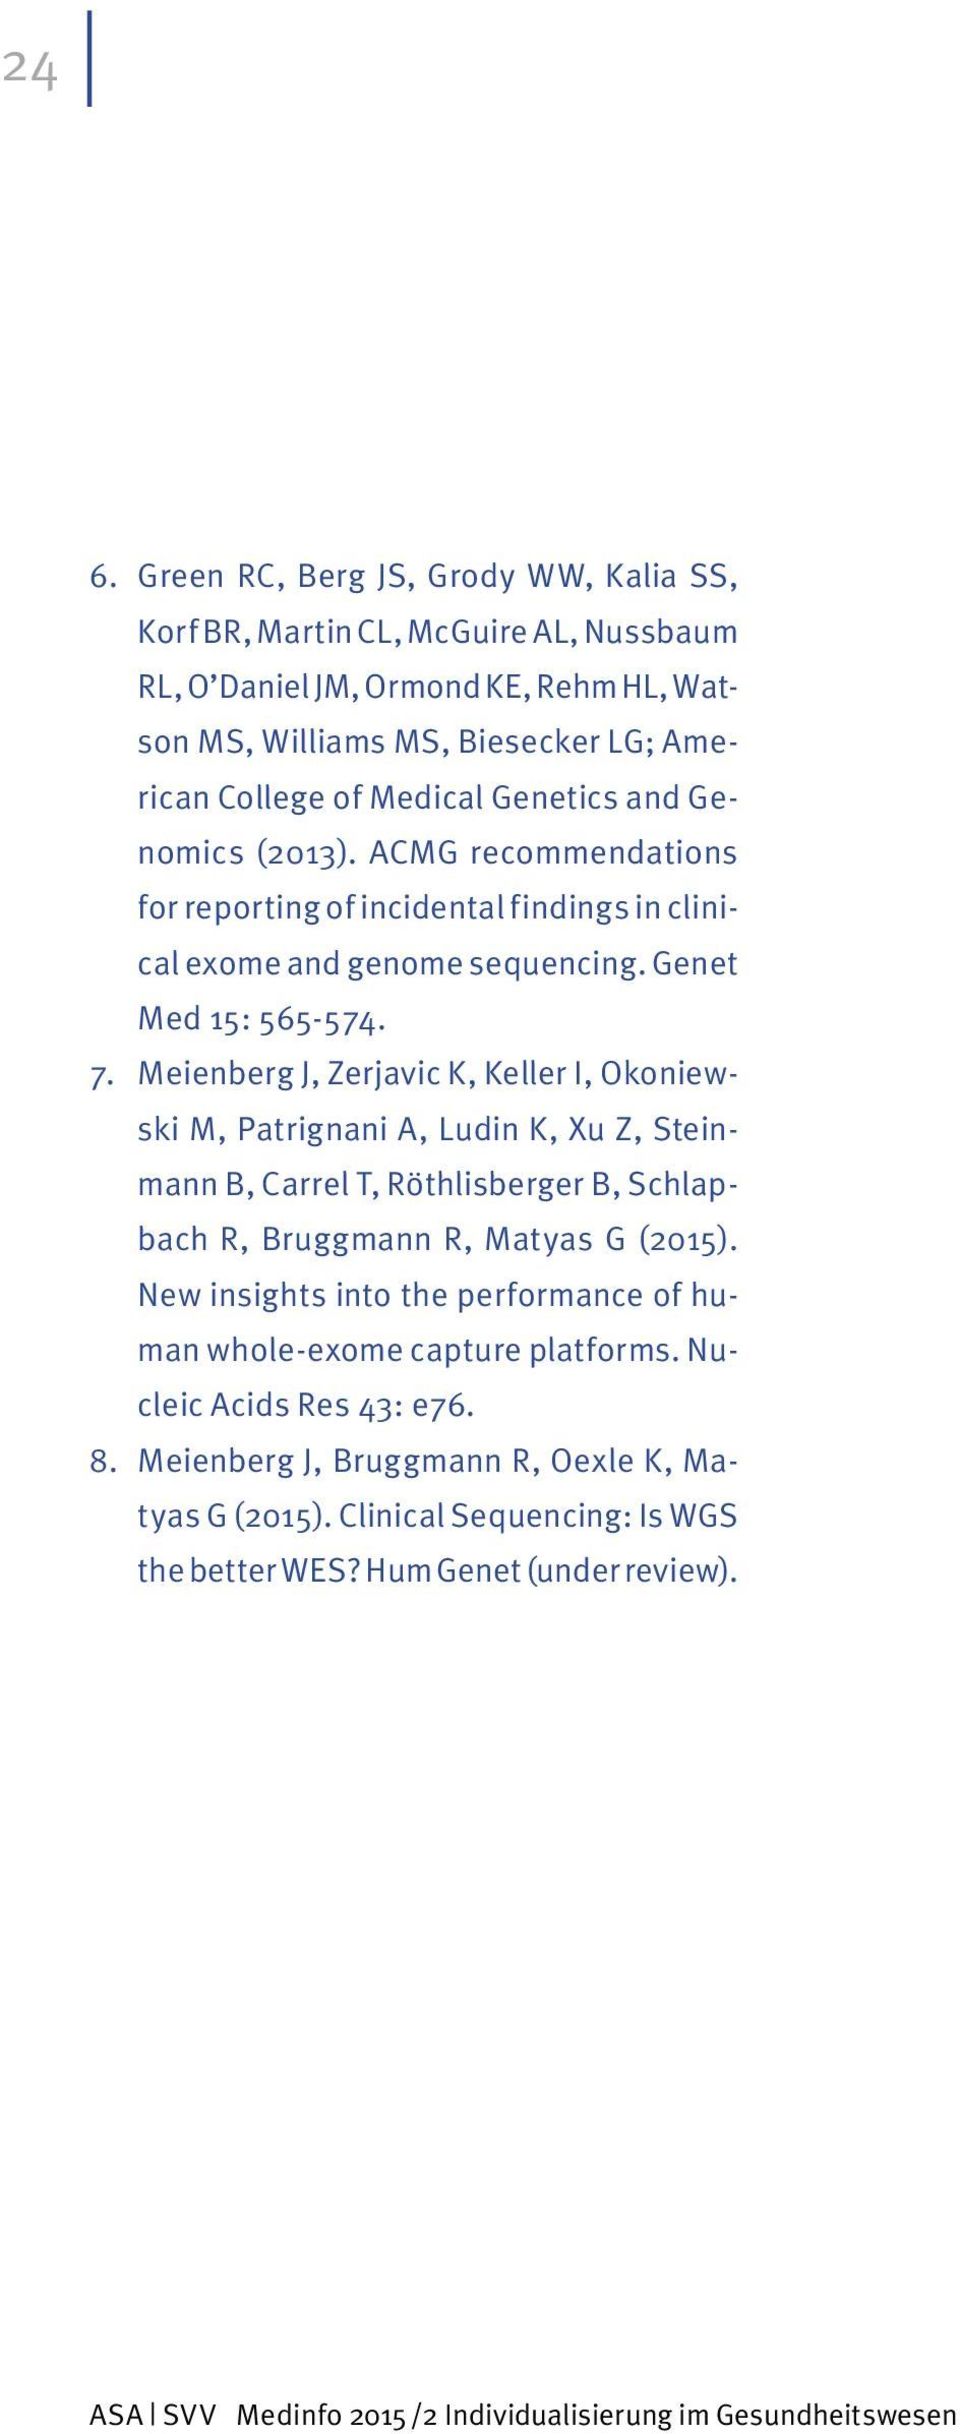 Meienberg J, Zerjavic K, Keller I, Okoniewski M, Patrignani A, Ludin K, Xu Z, Steinmann B, Carrel T, Röthlisberger B, Schlapbach R, Bruggmann R, Matyas G (2015).